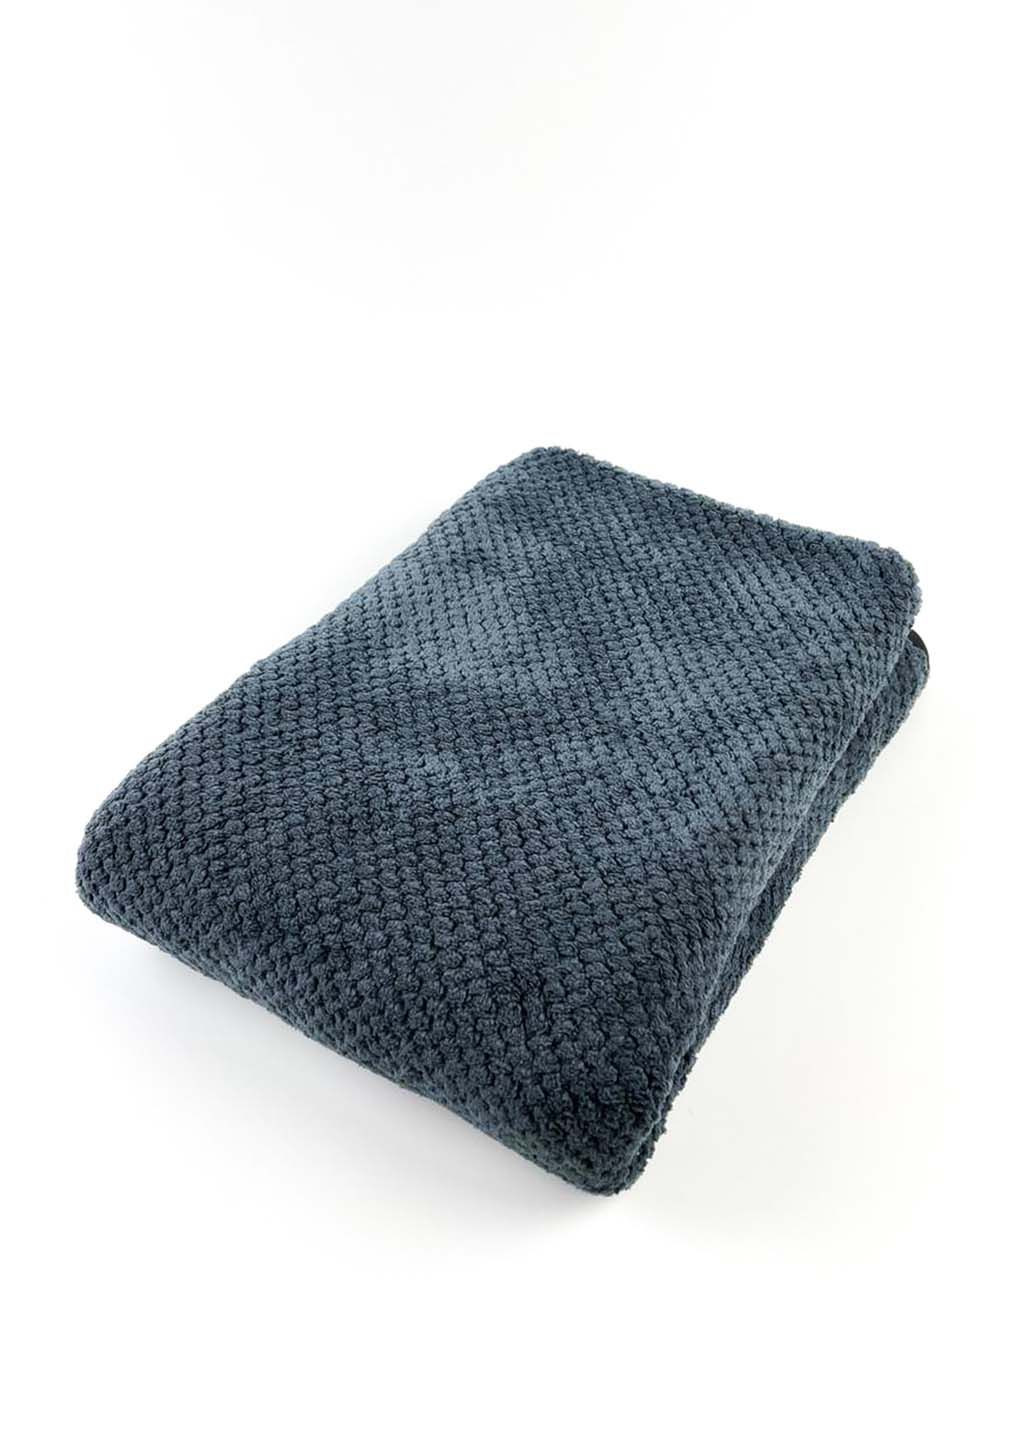 Homedec полотенце лицевое микрофибра 100х50 см однотонный темно-синий производство - Турция